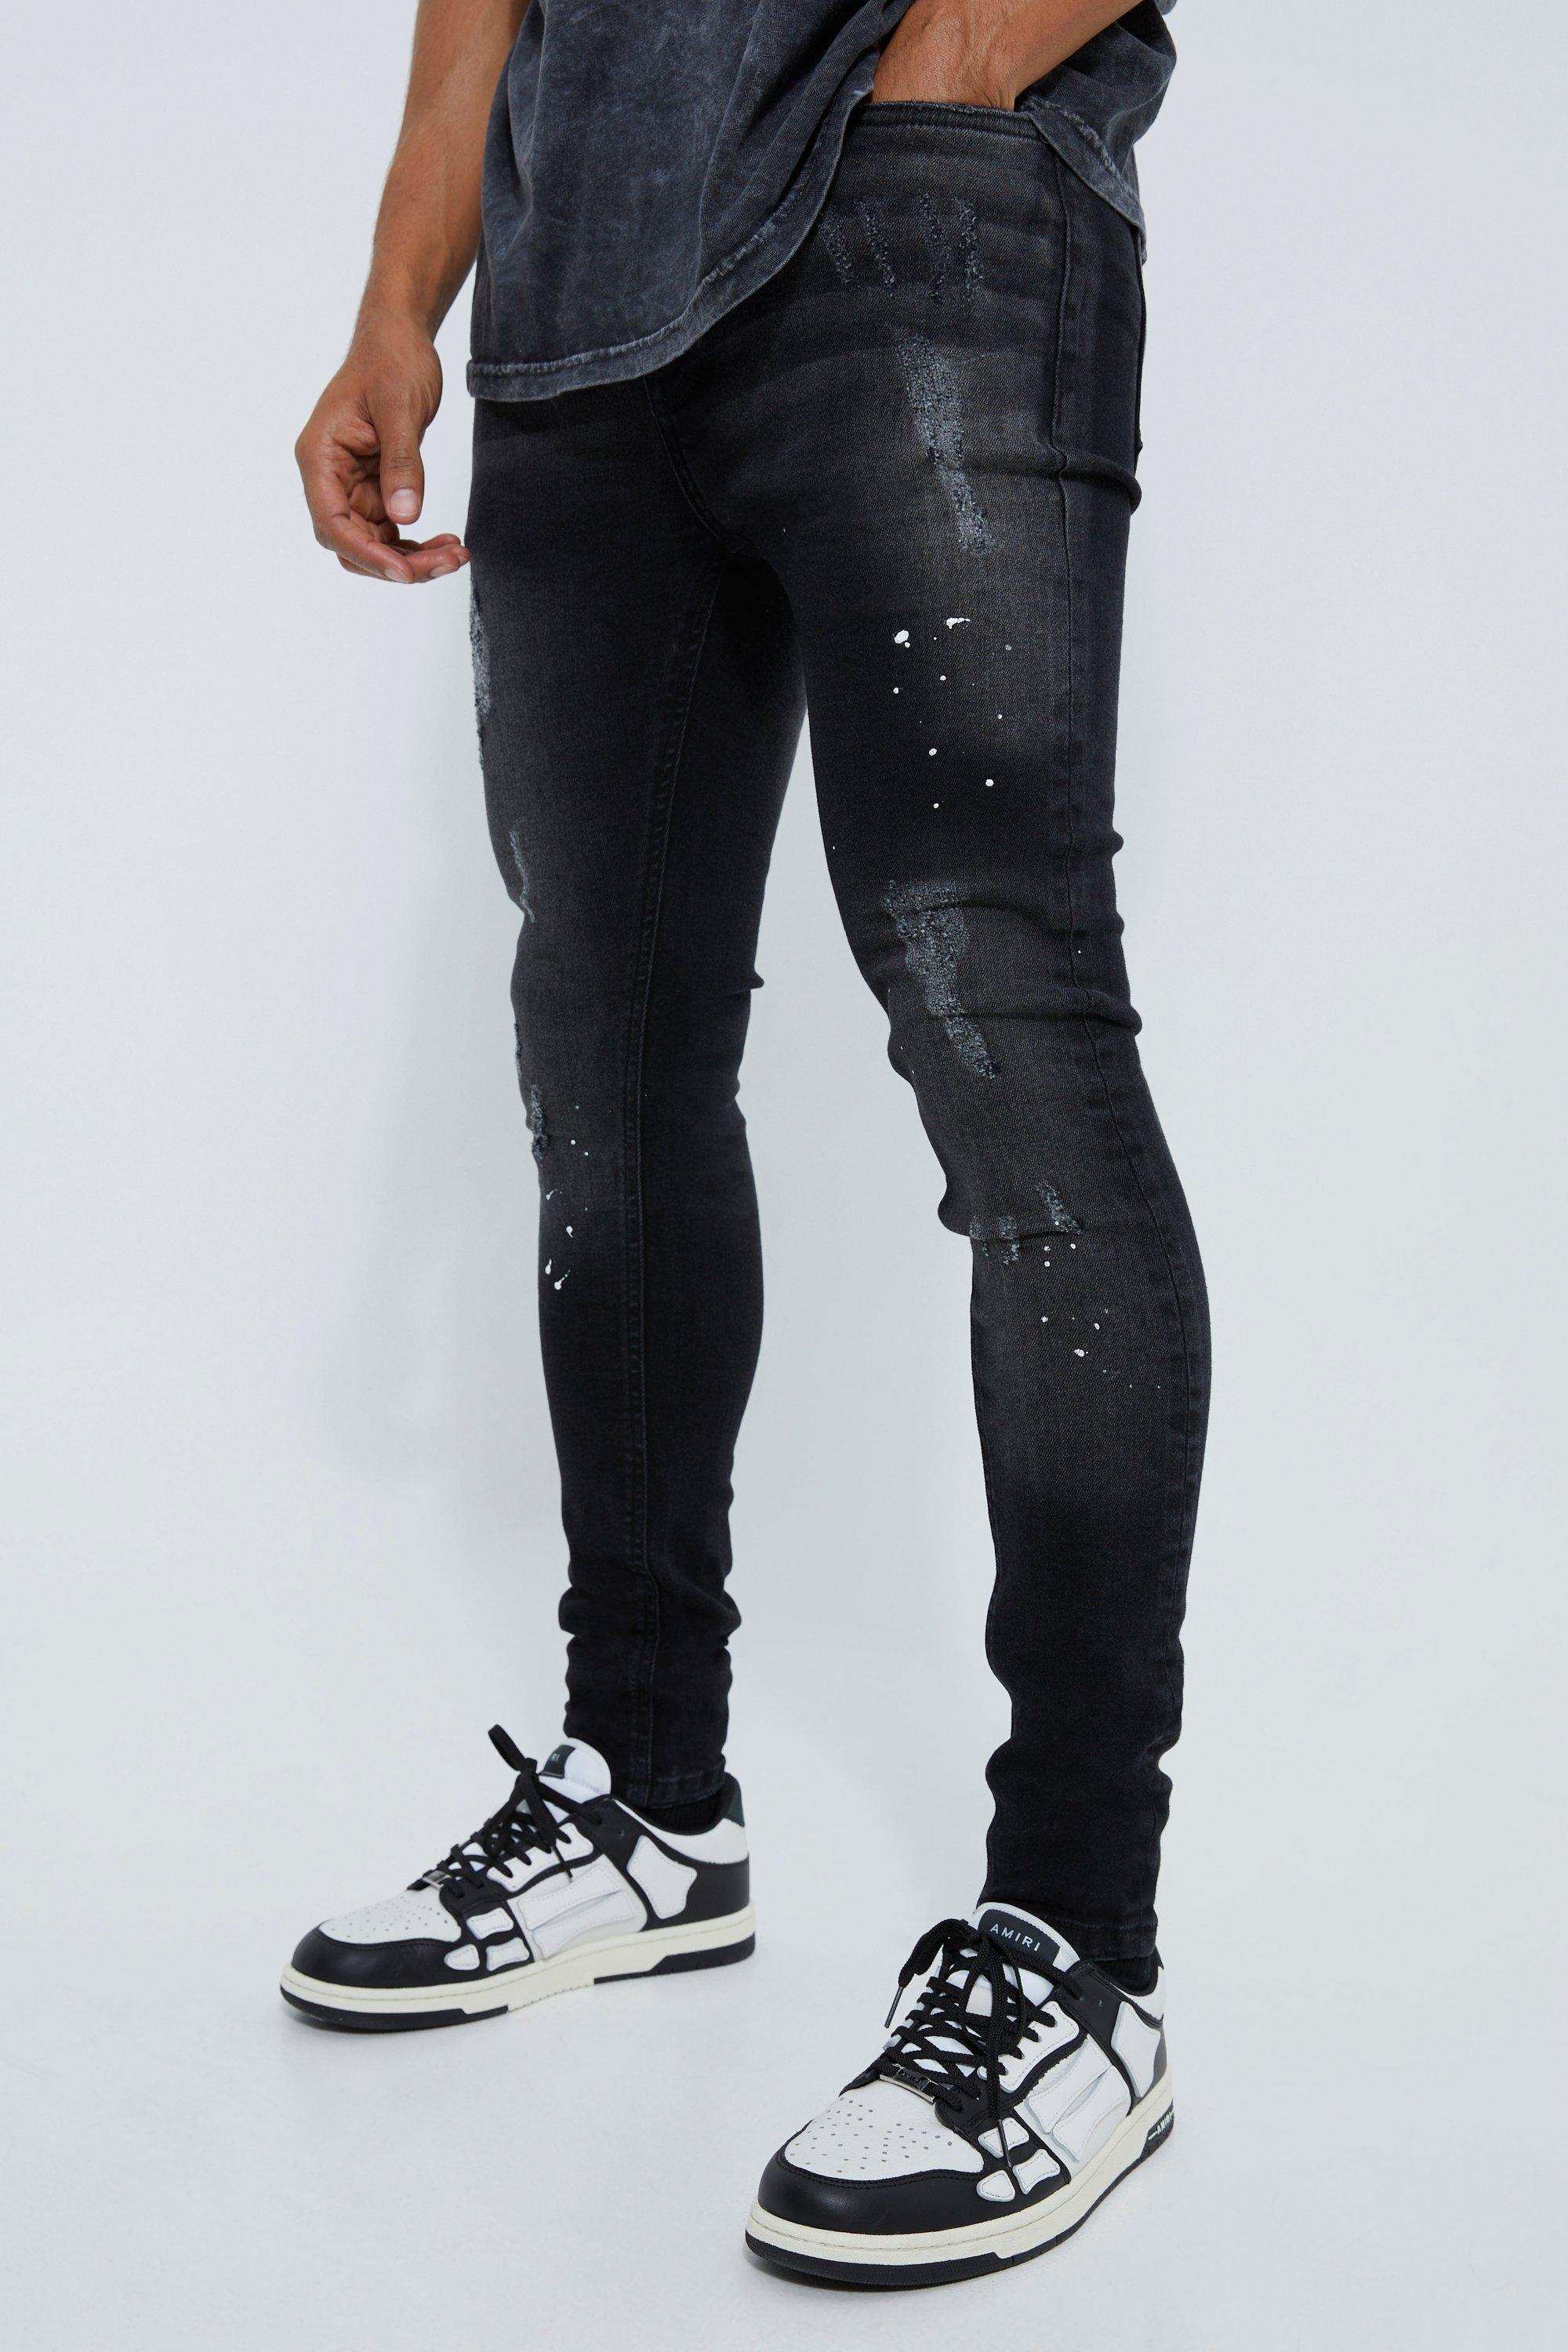 Black Jeans For Men, Black Ripped & Skinny Jeans